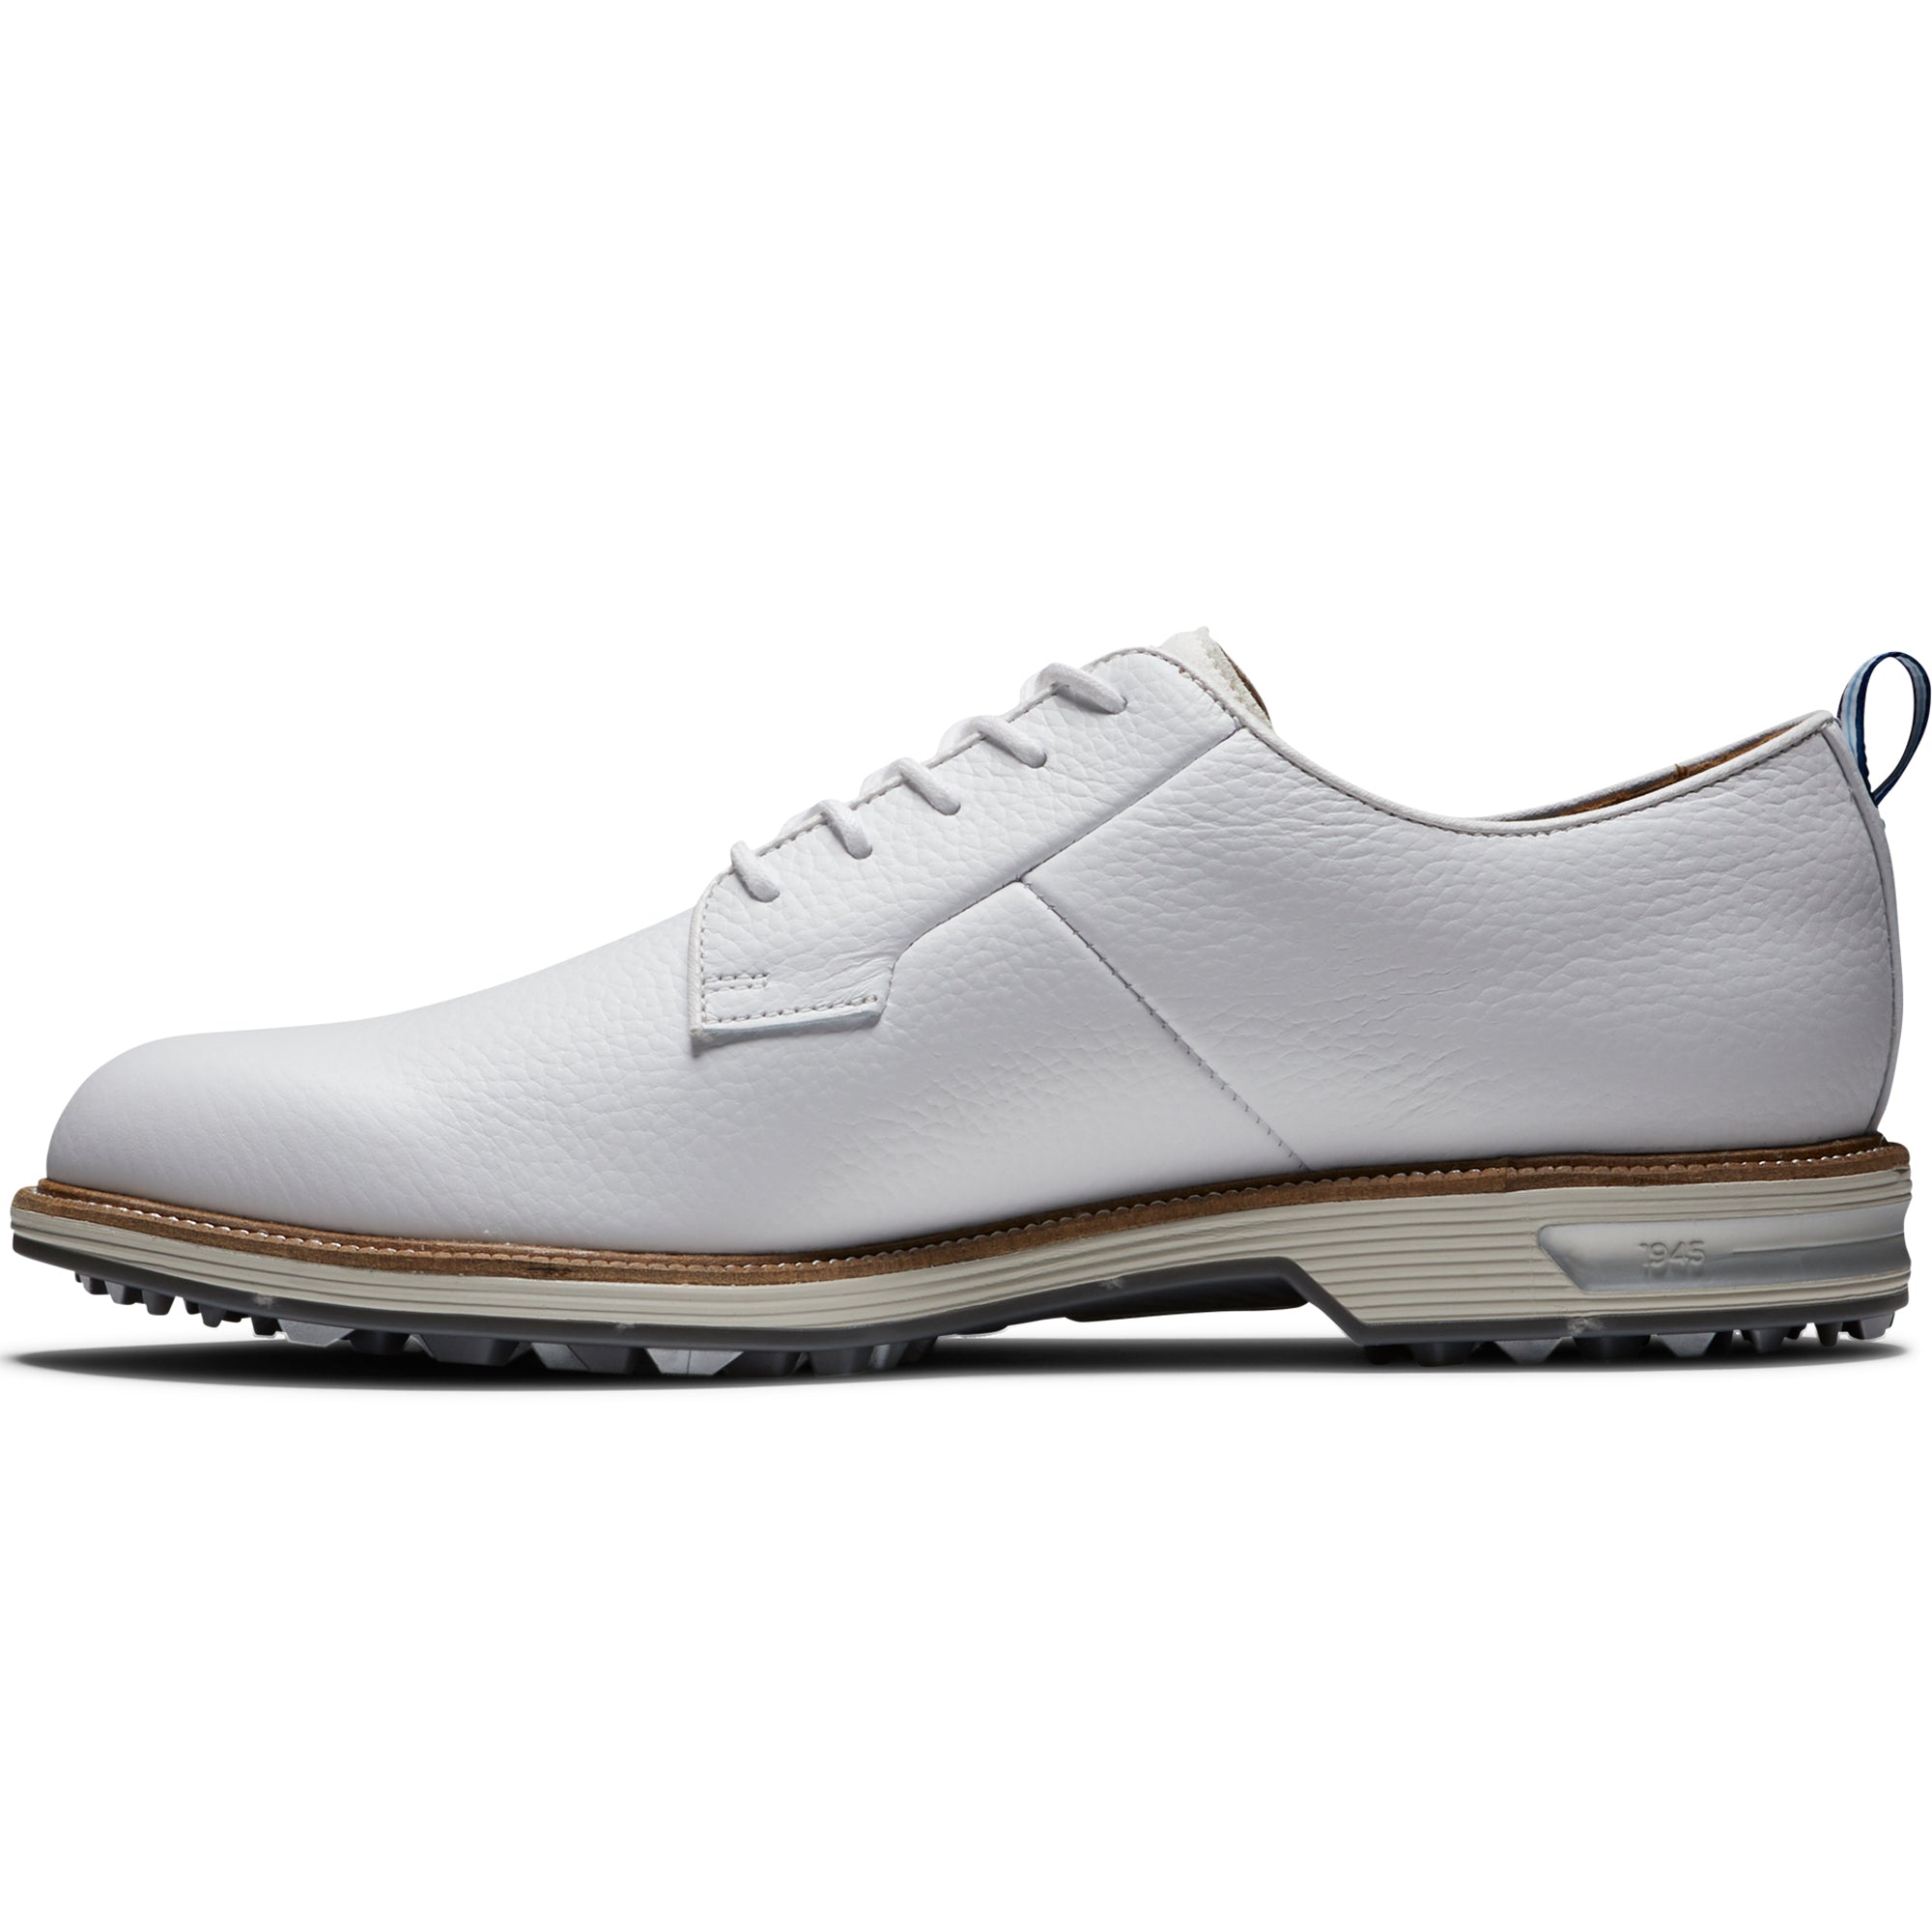 footjoy-premiere-series-field-golf-shoes-53986-white